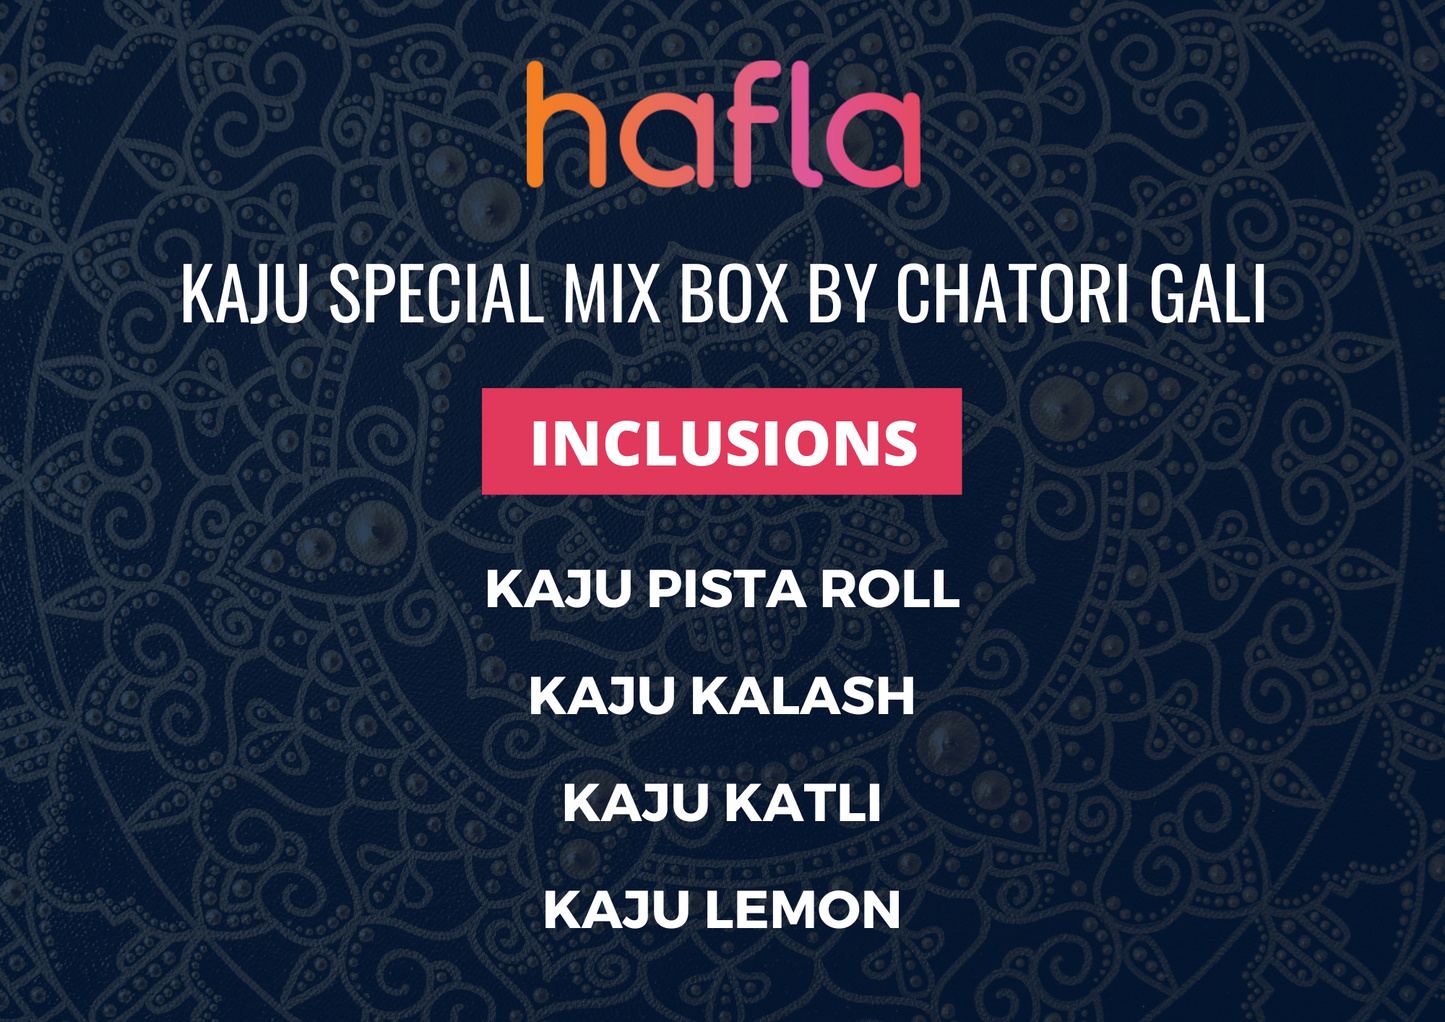 Kaju Special Mix Box by Chatori Gali